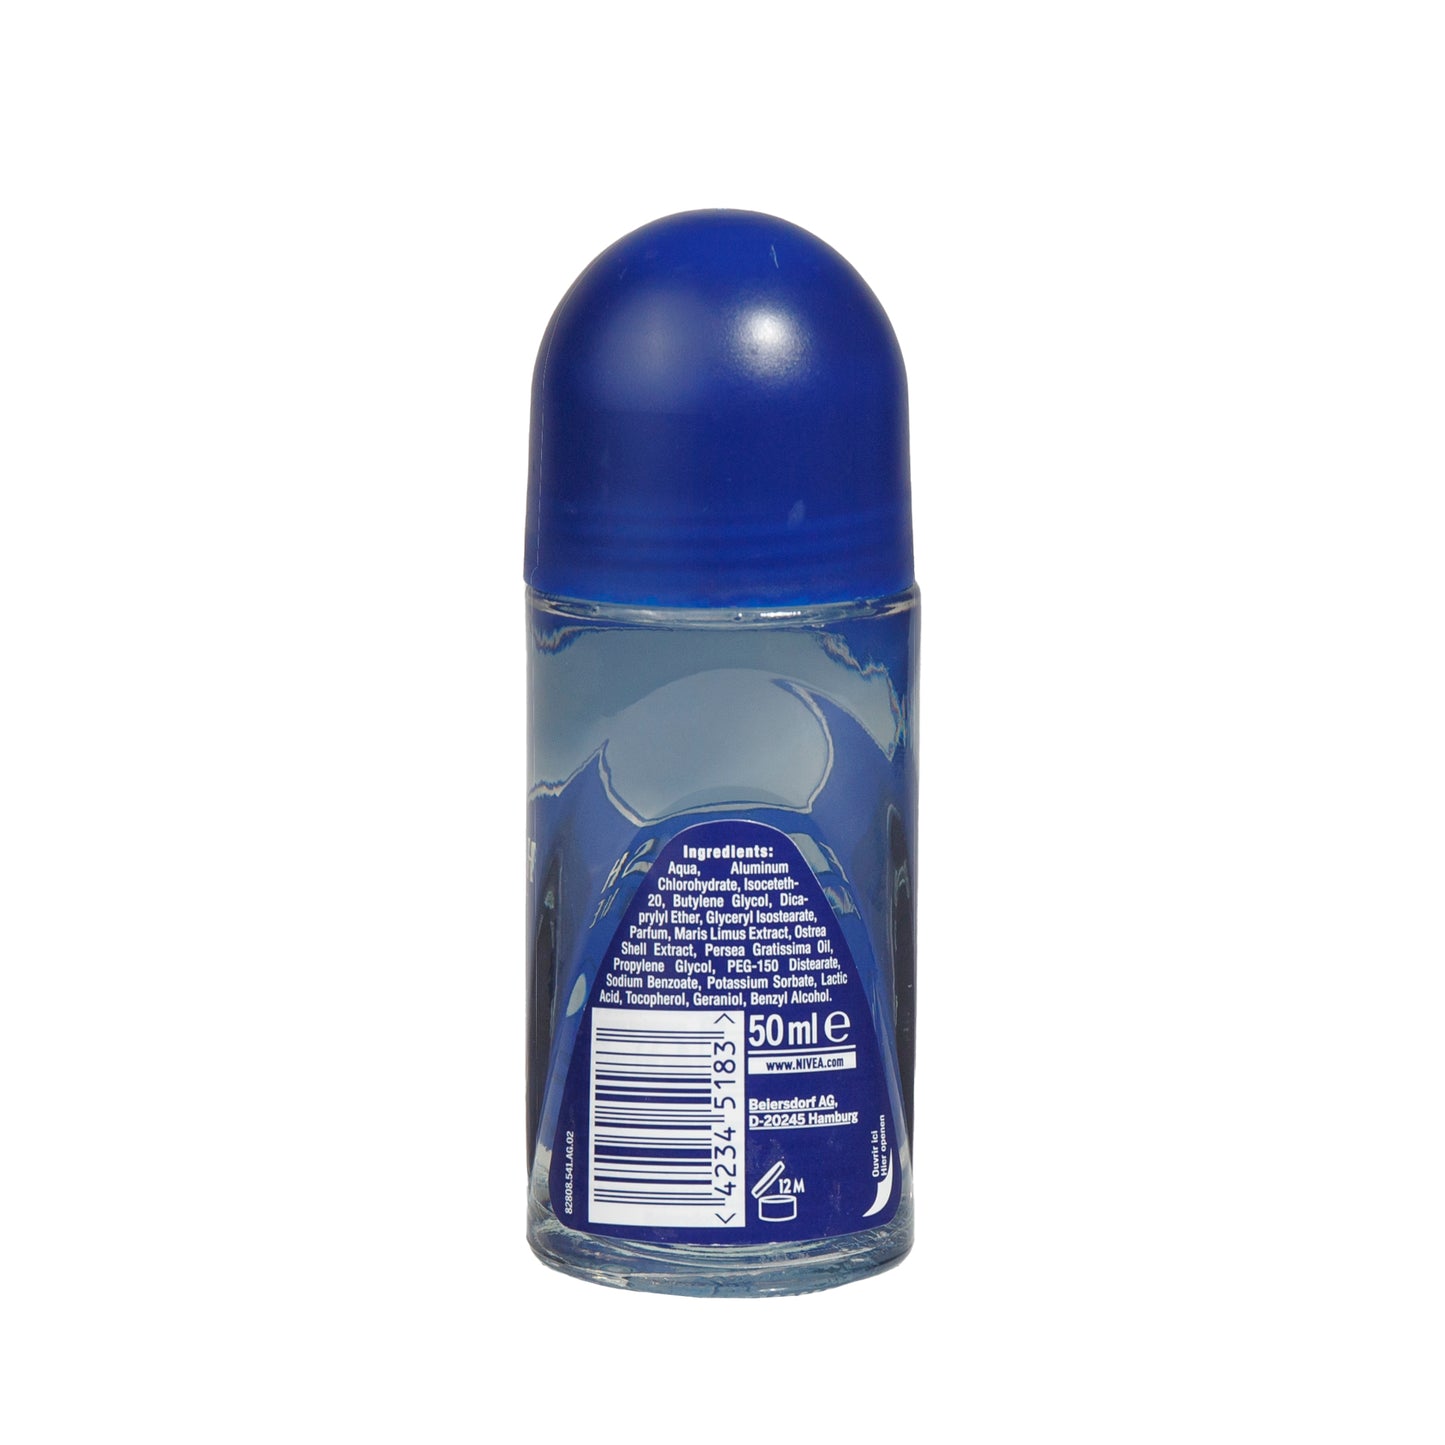 Alternate Image of Men's Roll-On Fresh Active Anti-Perspirant Deodorant